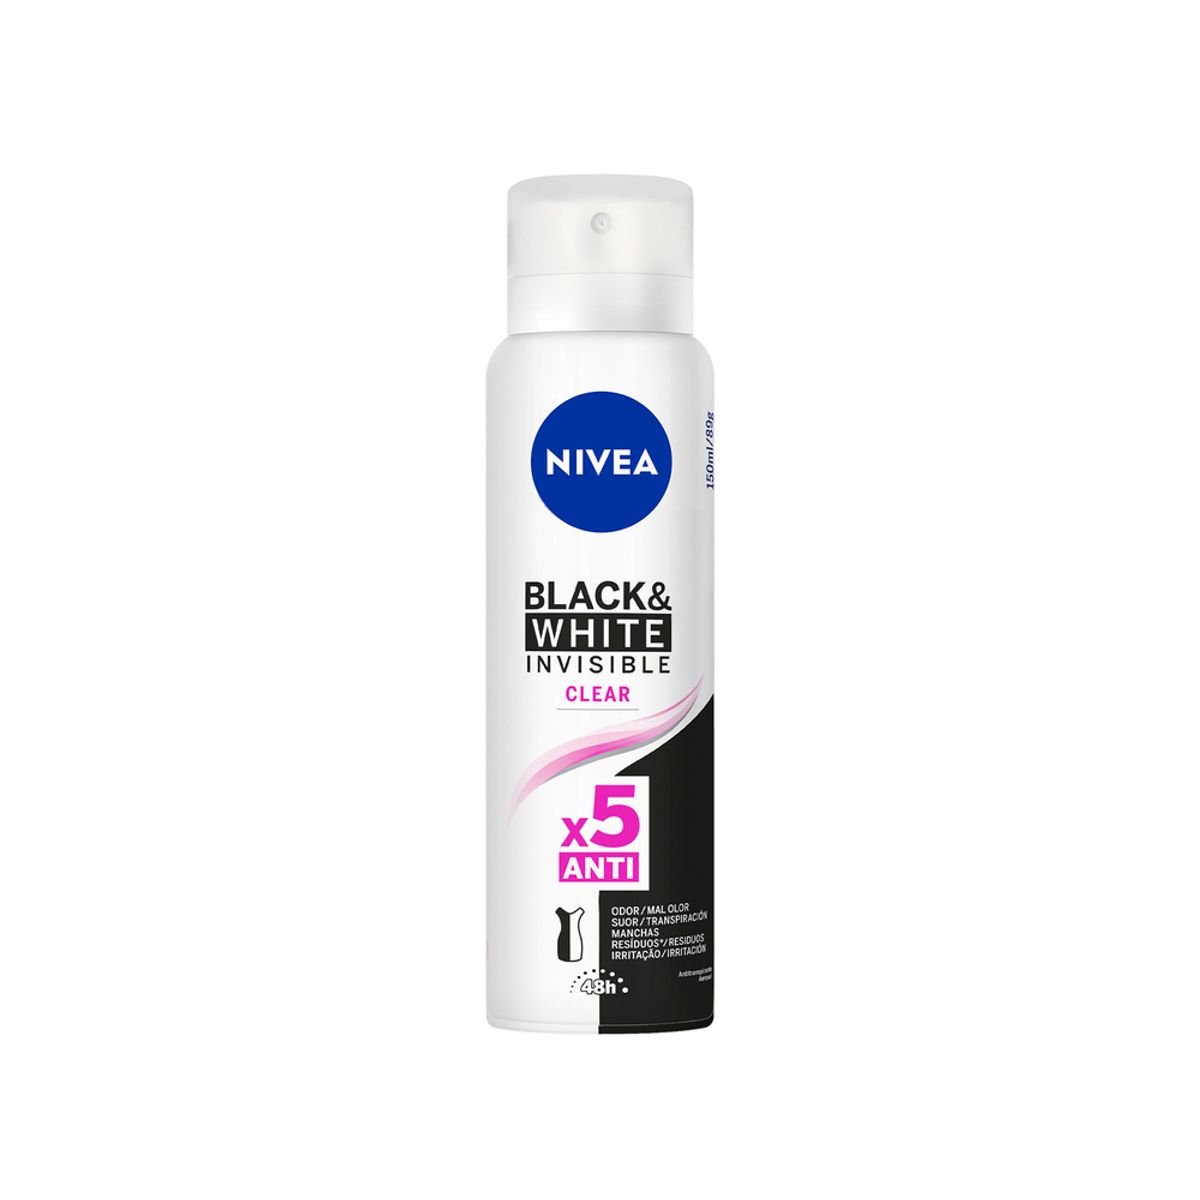 nivea desodorante antitranspirante aerosol dry comfort promo 200ml